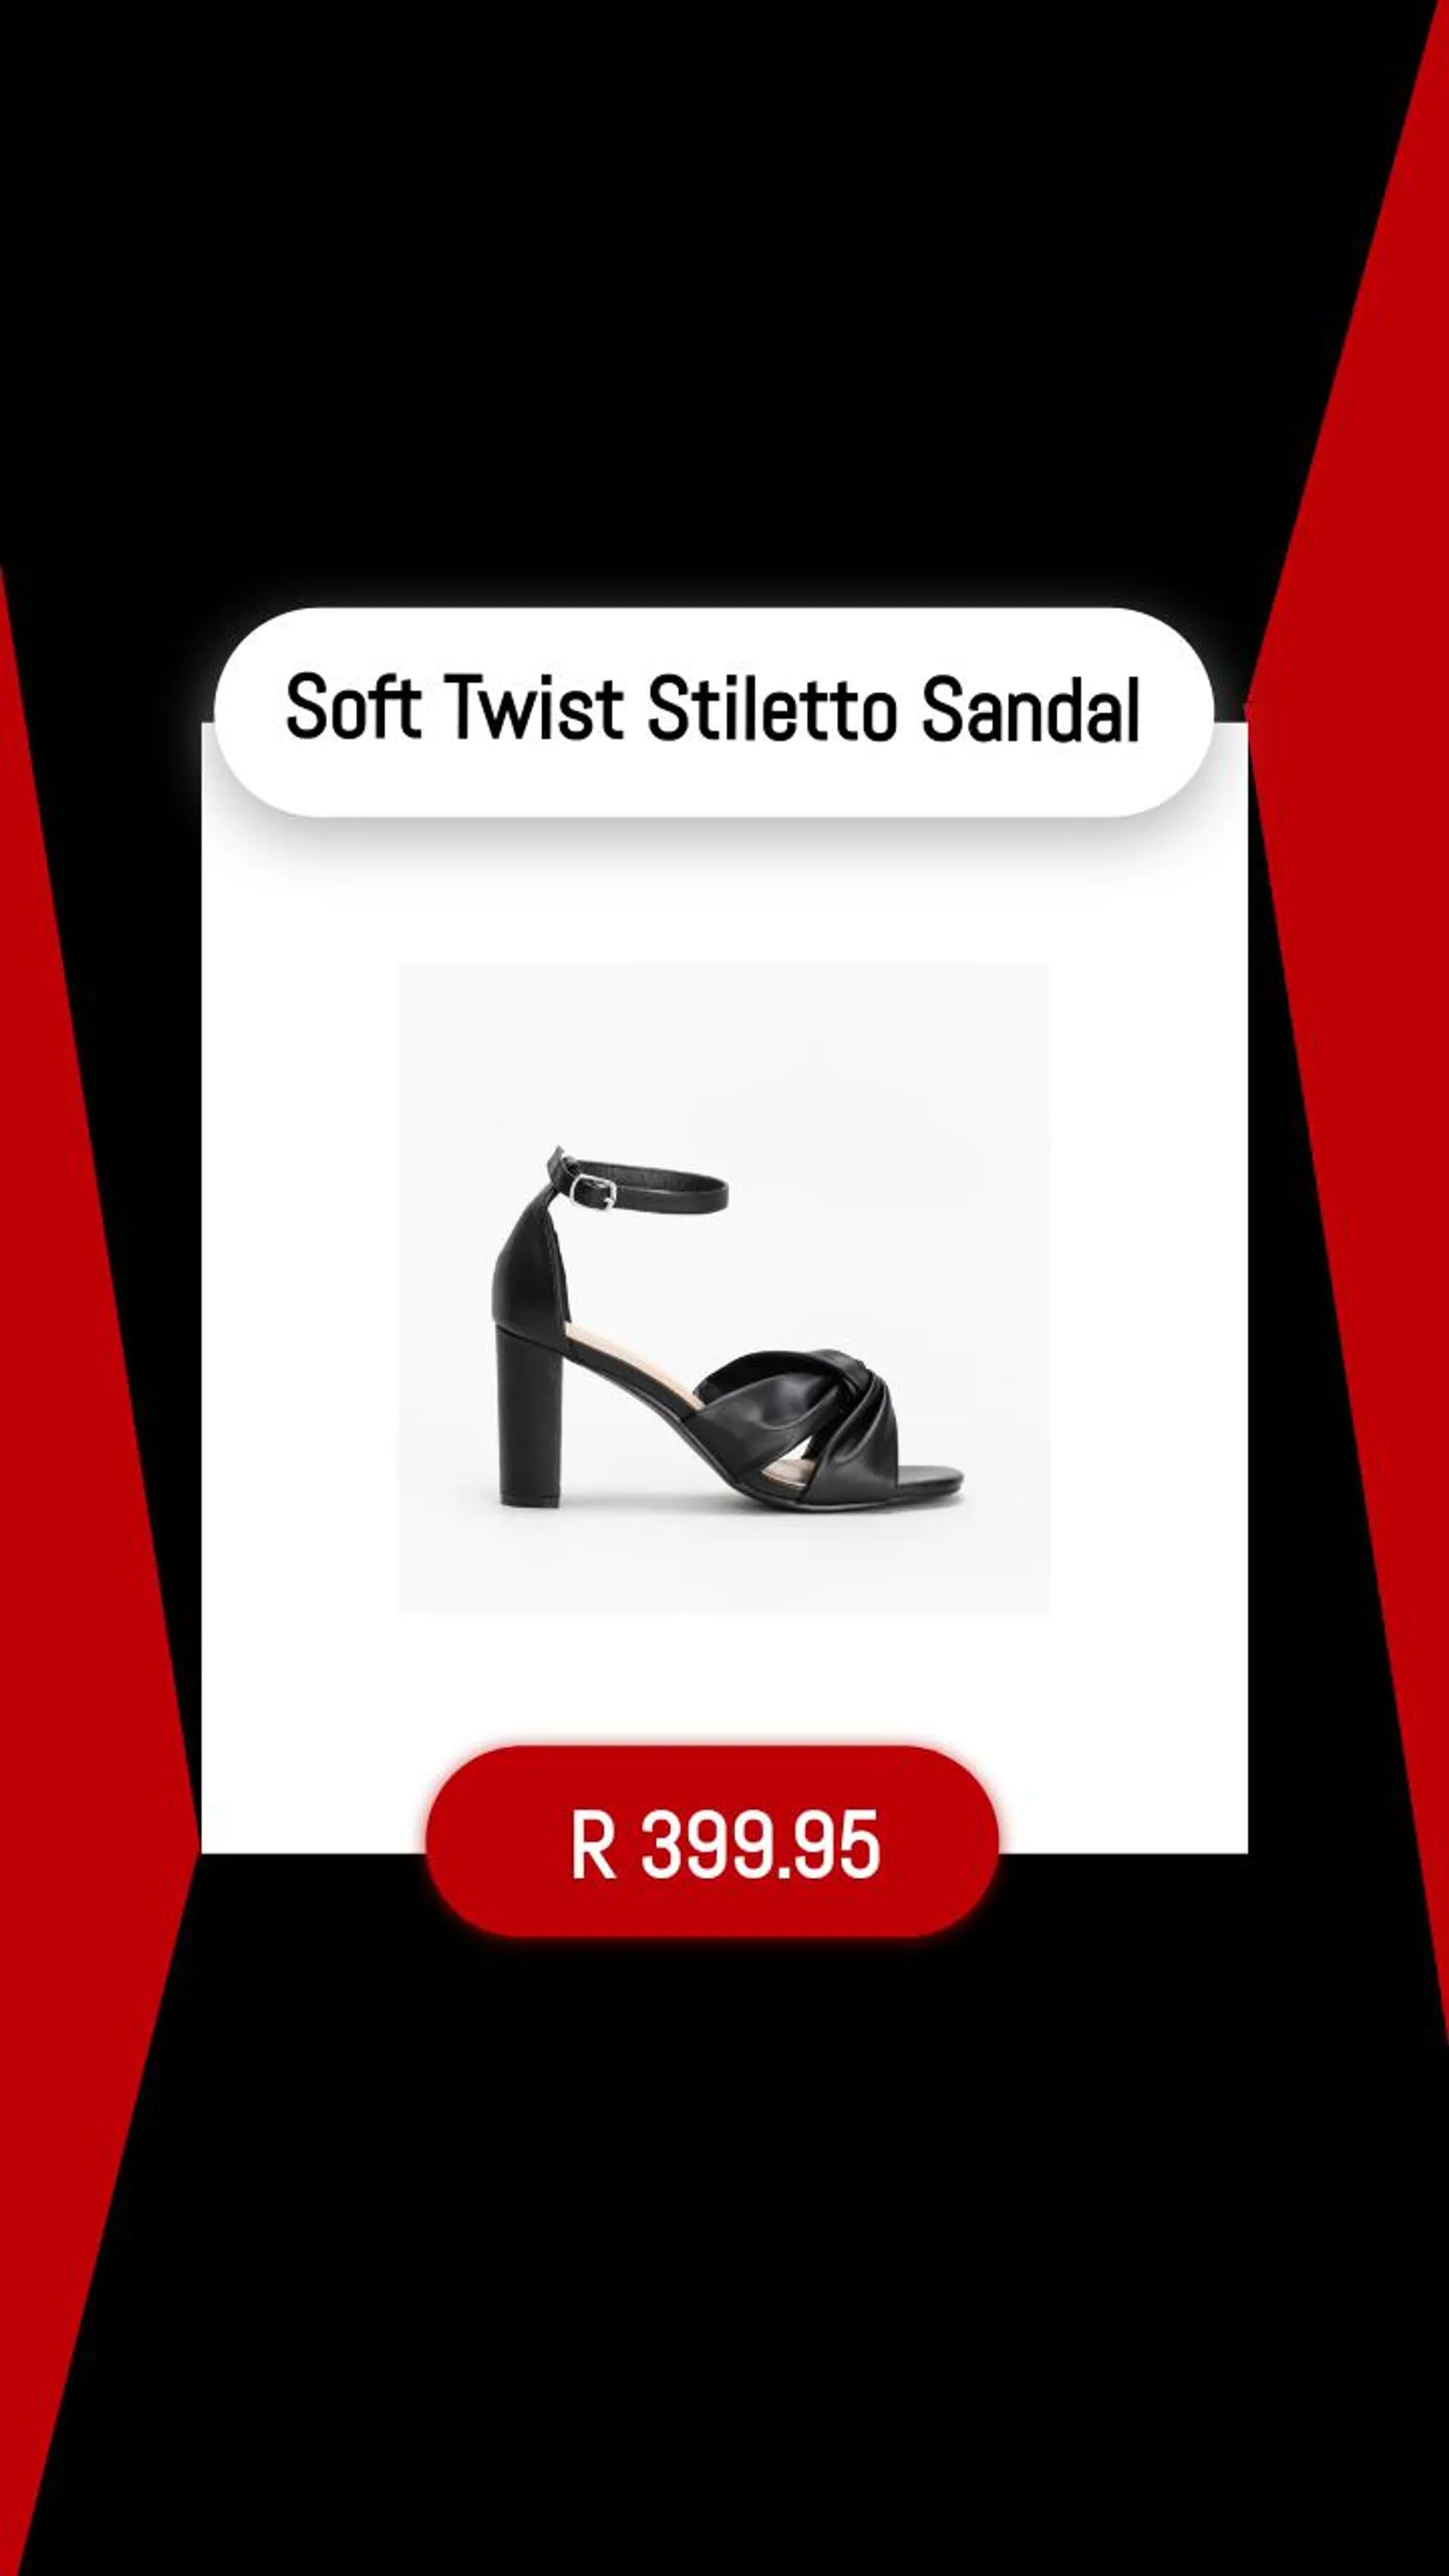 Soft Twist Stiletto Sandal